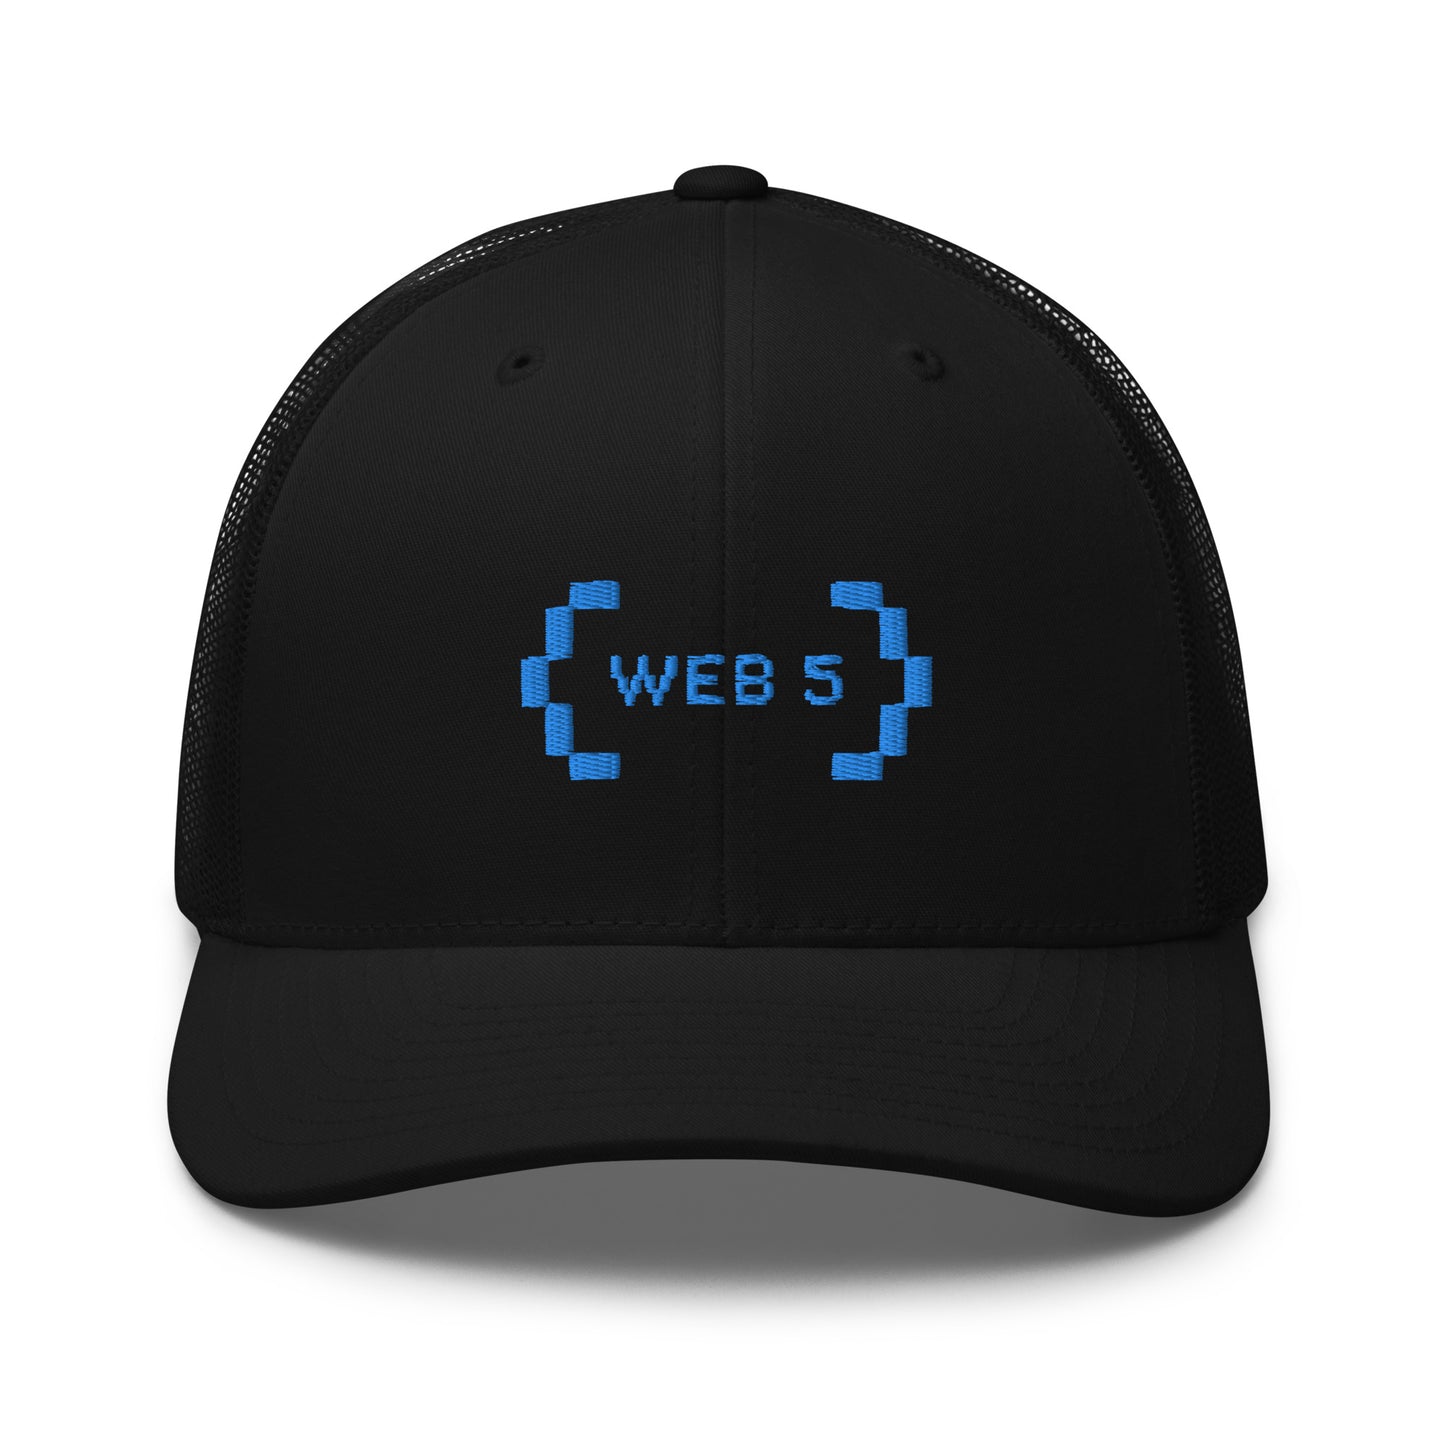 Web5 Trucker Cap